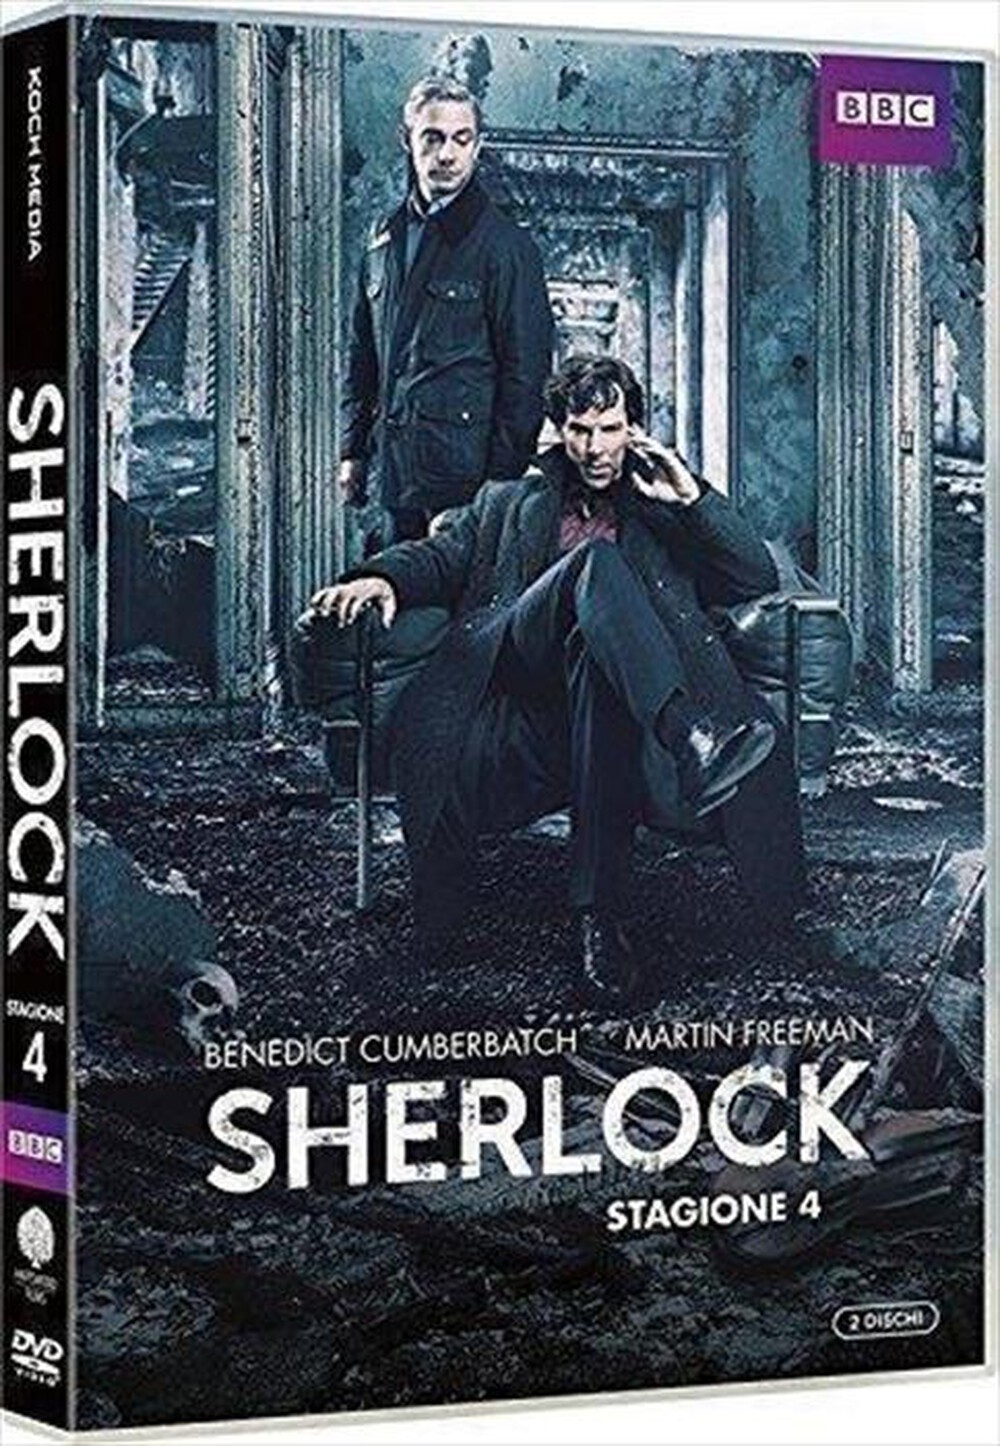 "KOCH MEDIA - Sherlock Stagione #04 (2 Dvd)"